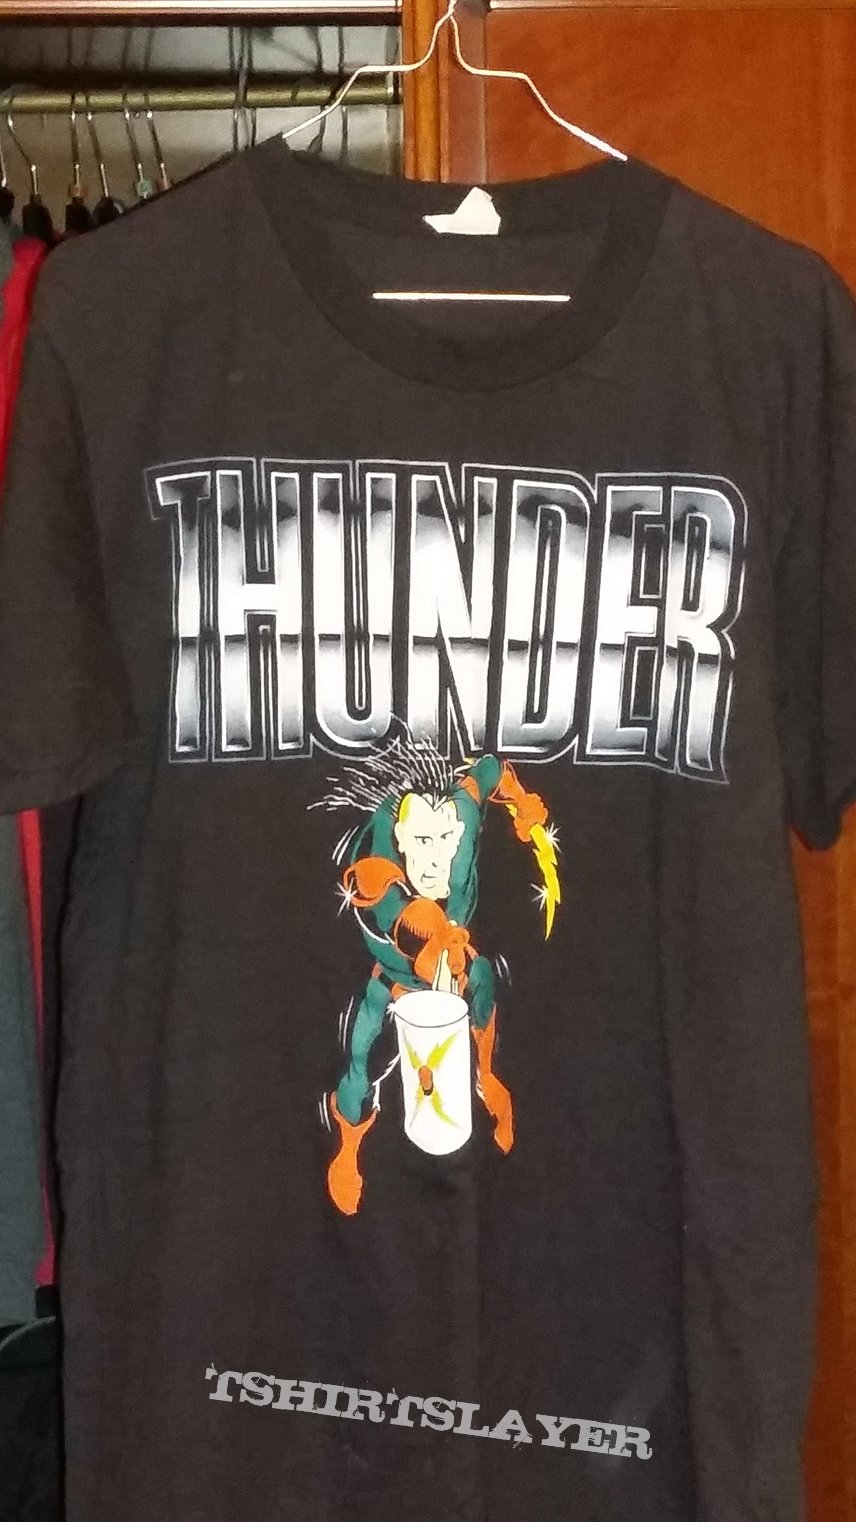 Thunder - Backstreet Symphony Spring Tour 1990 shirt